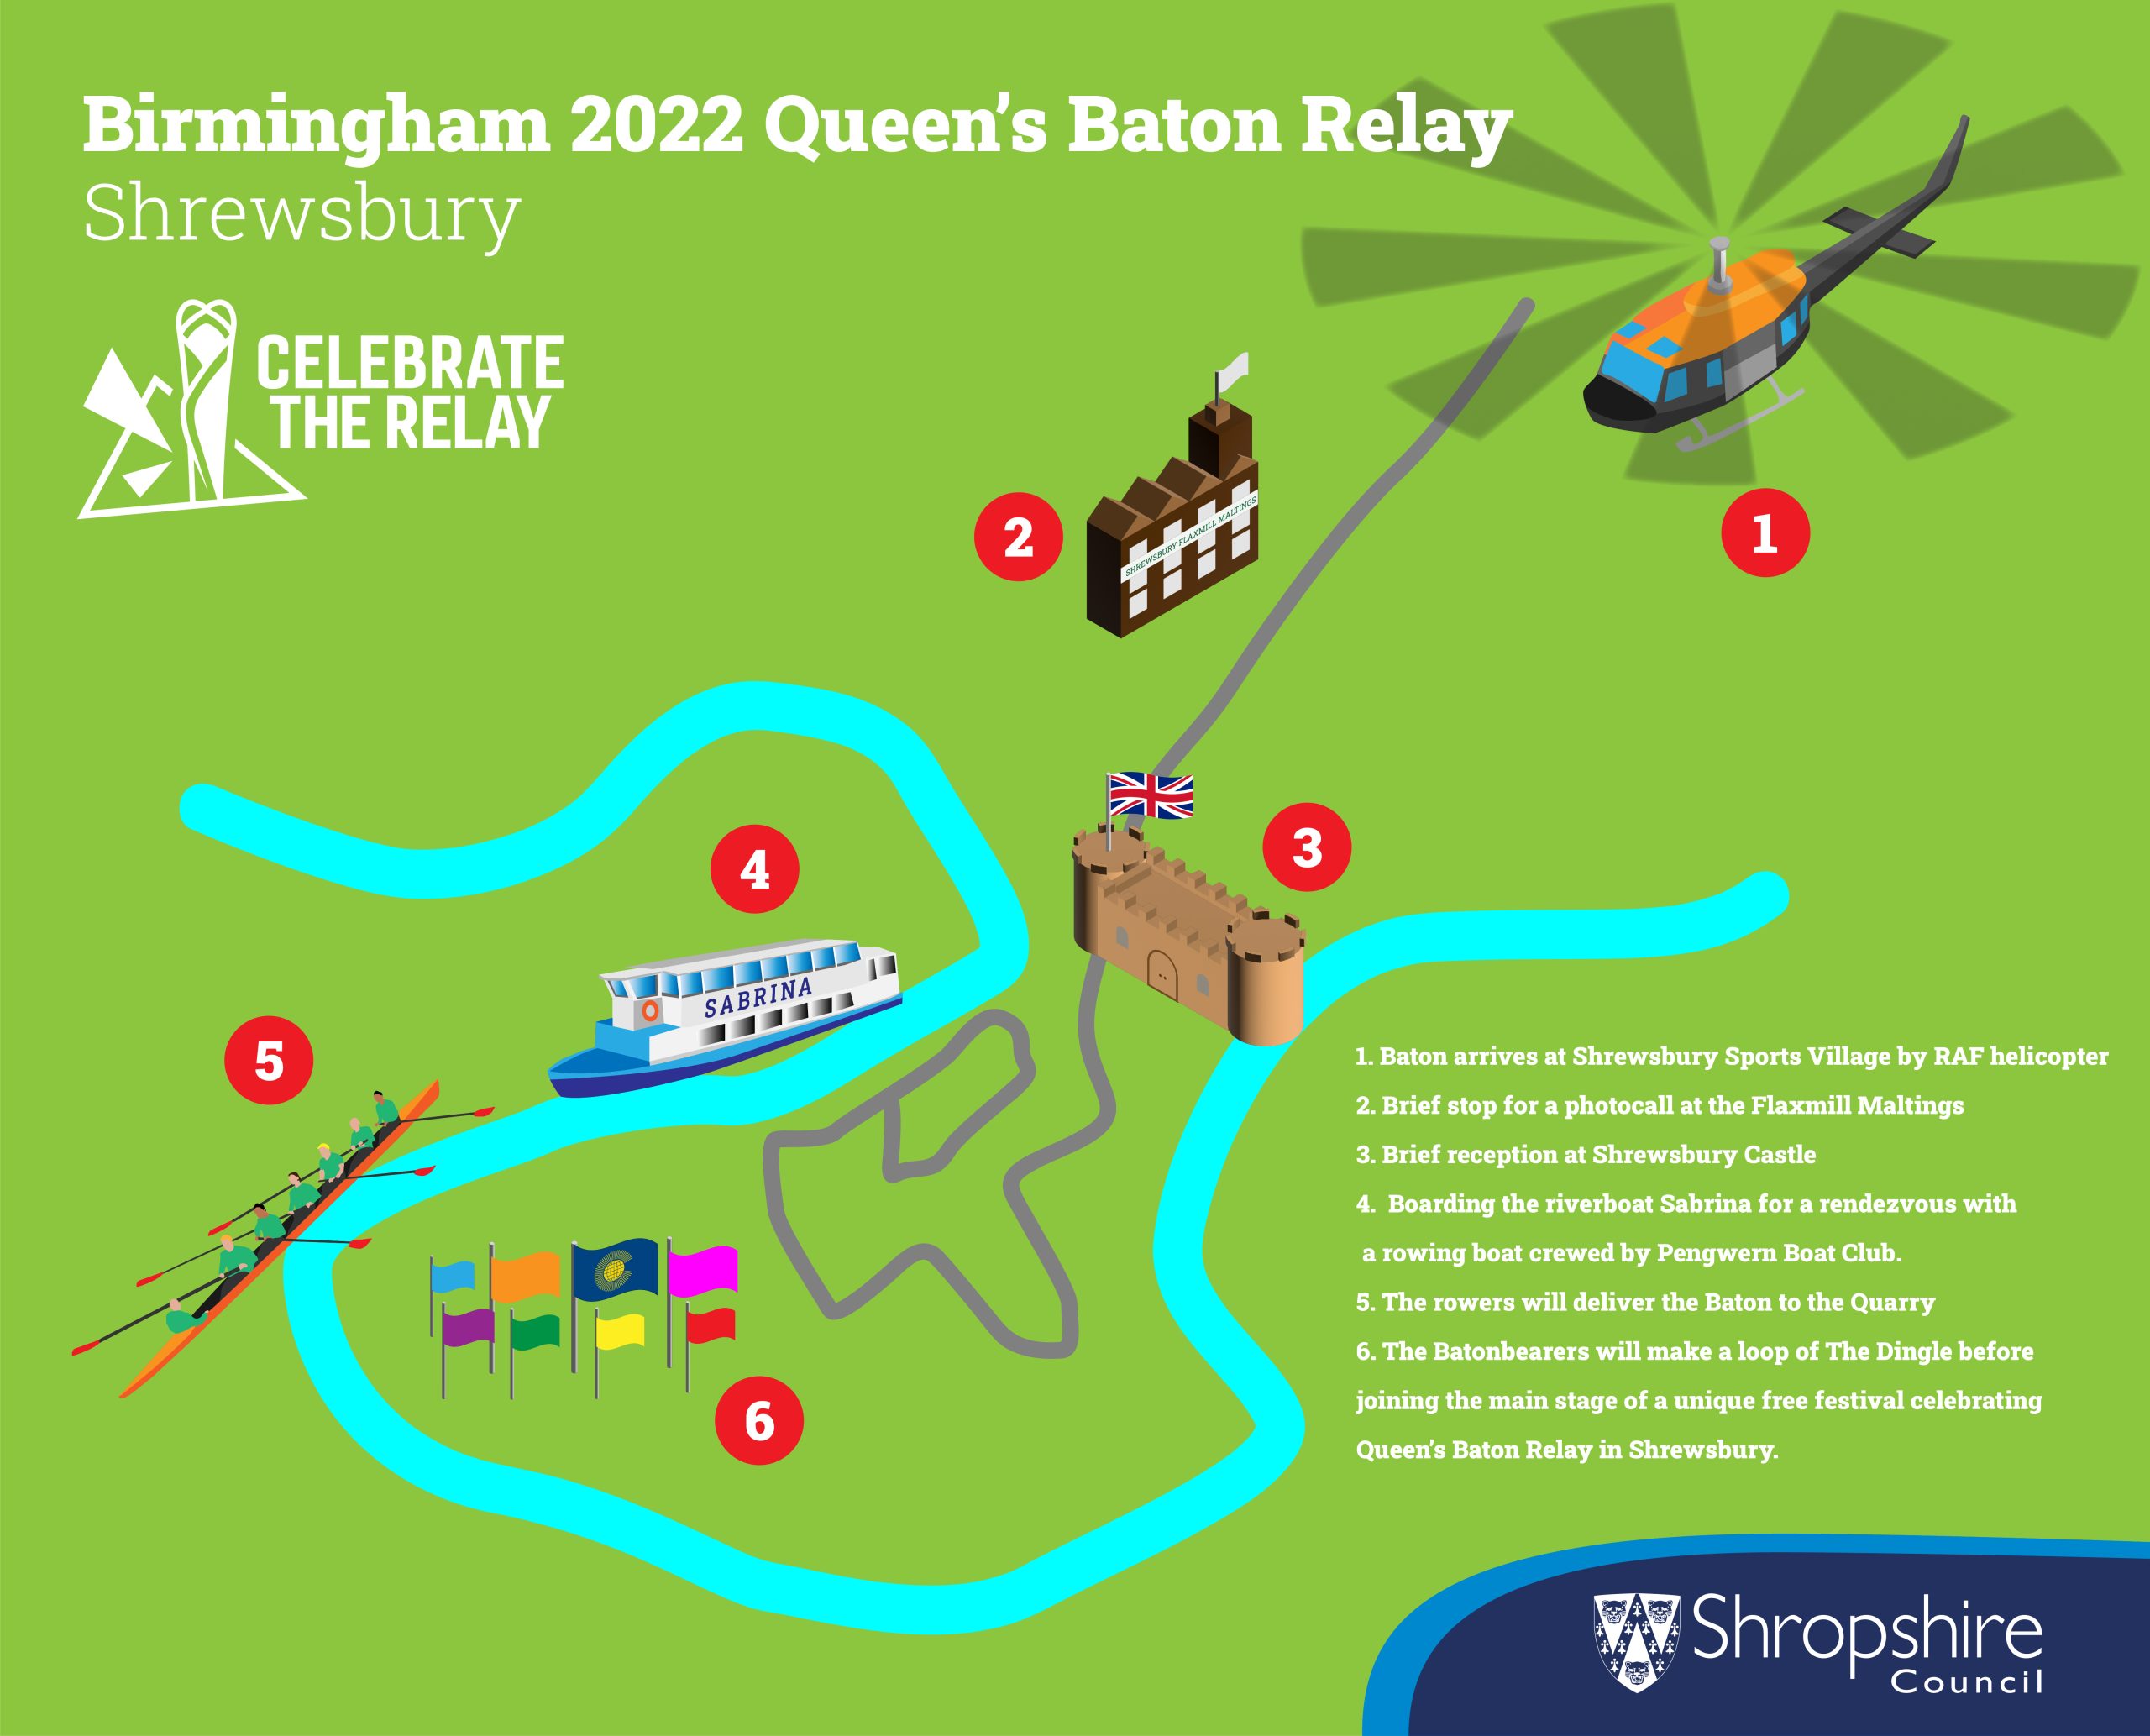 The Queen's Baton Relay - Shrewsbury route iinfographic